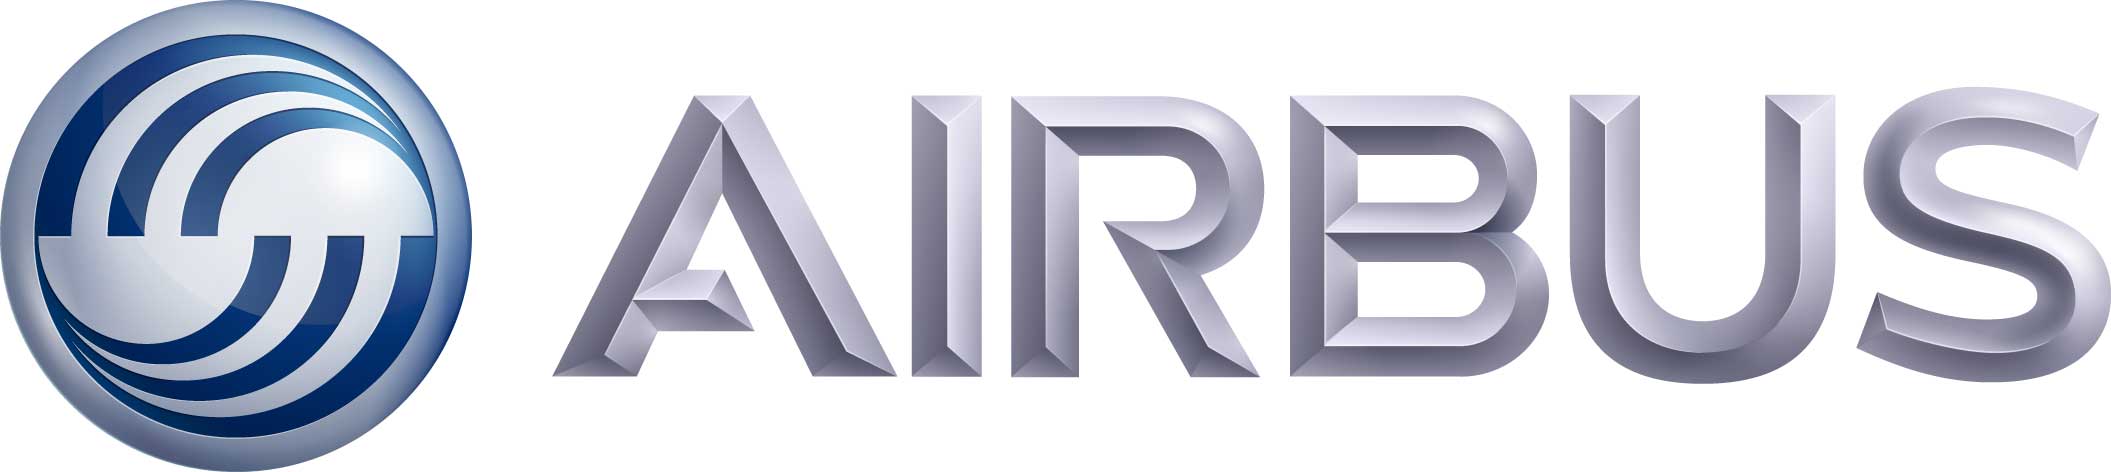 Airbus Logo - Airbus Logo Vector PNG Transparent Airbus Logo Vector.PNG Images ...